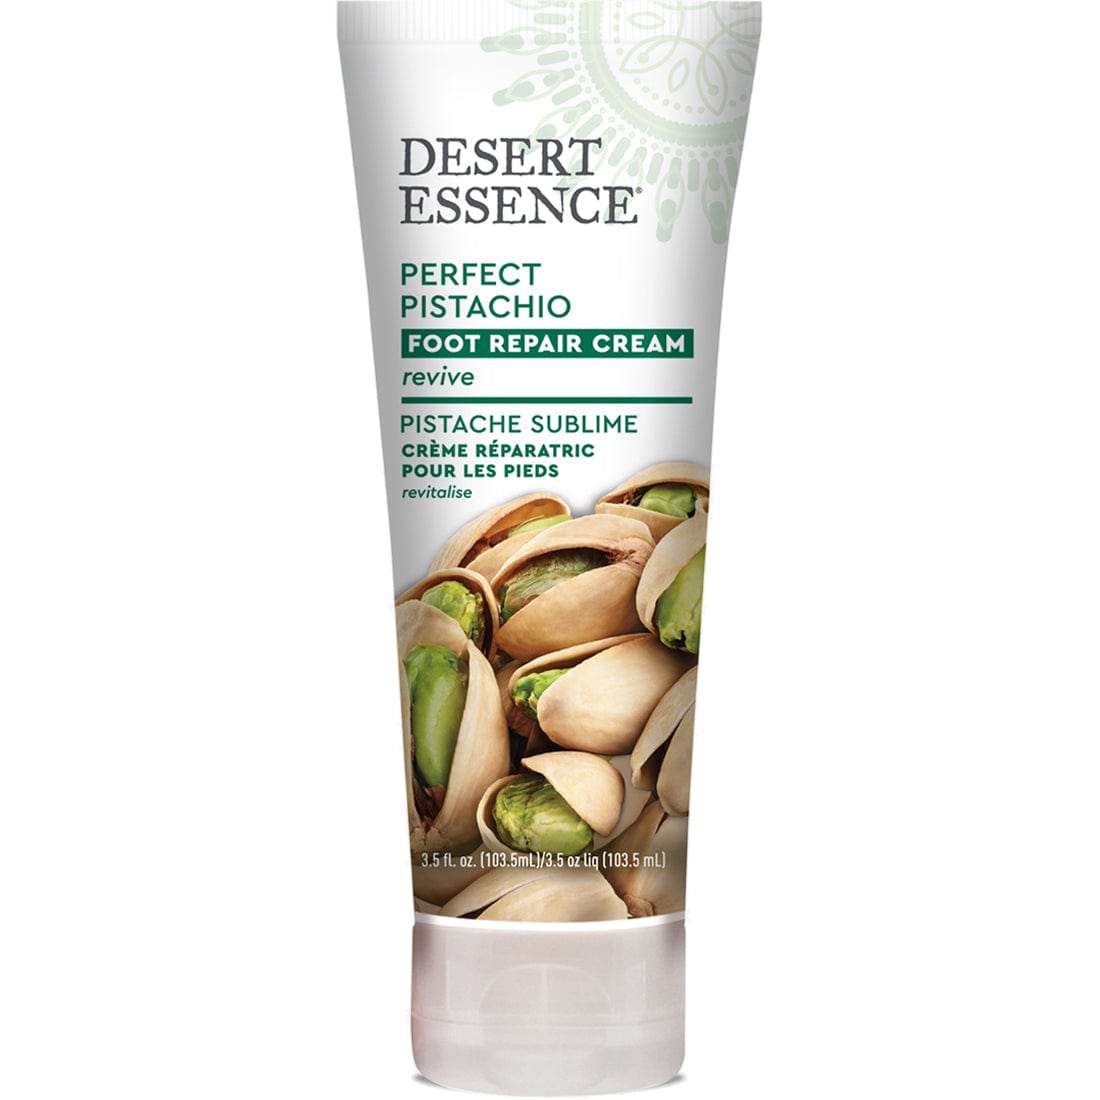 Desert Essence Foot Repair Cream, 104ml